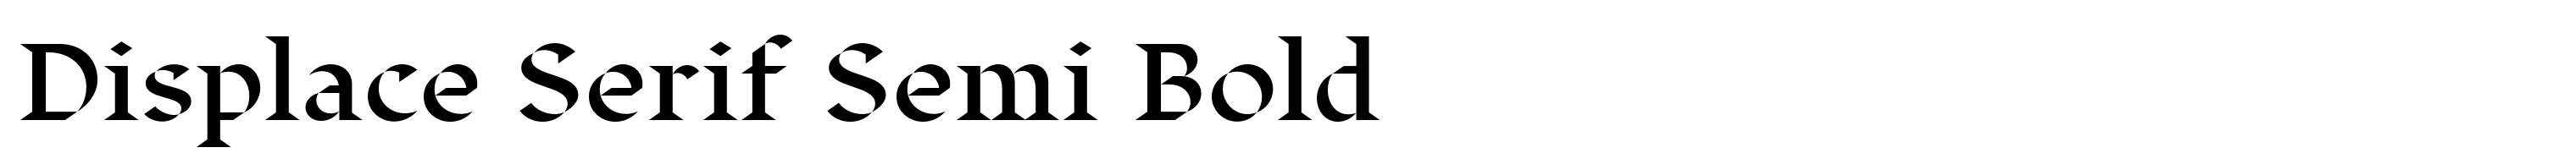 Displace Serif Semi Bold